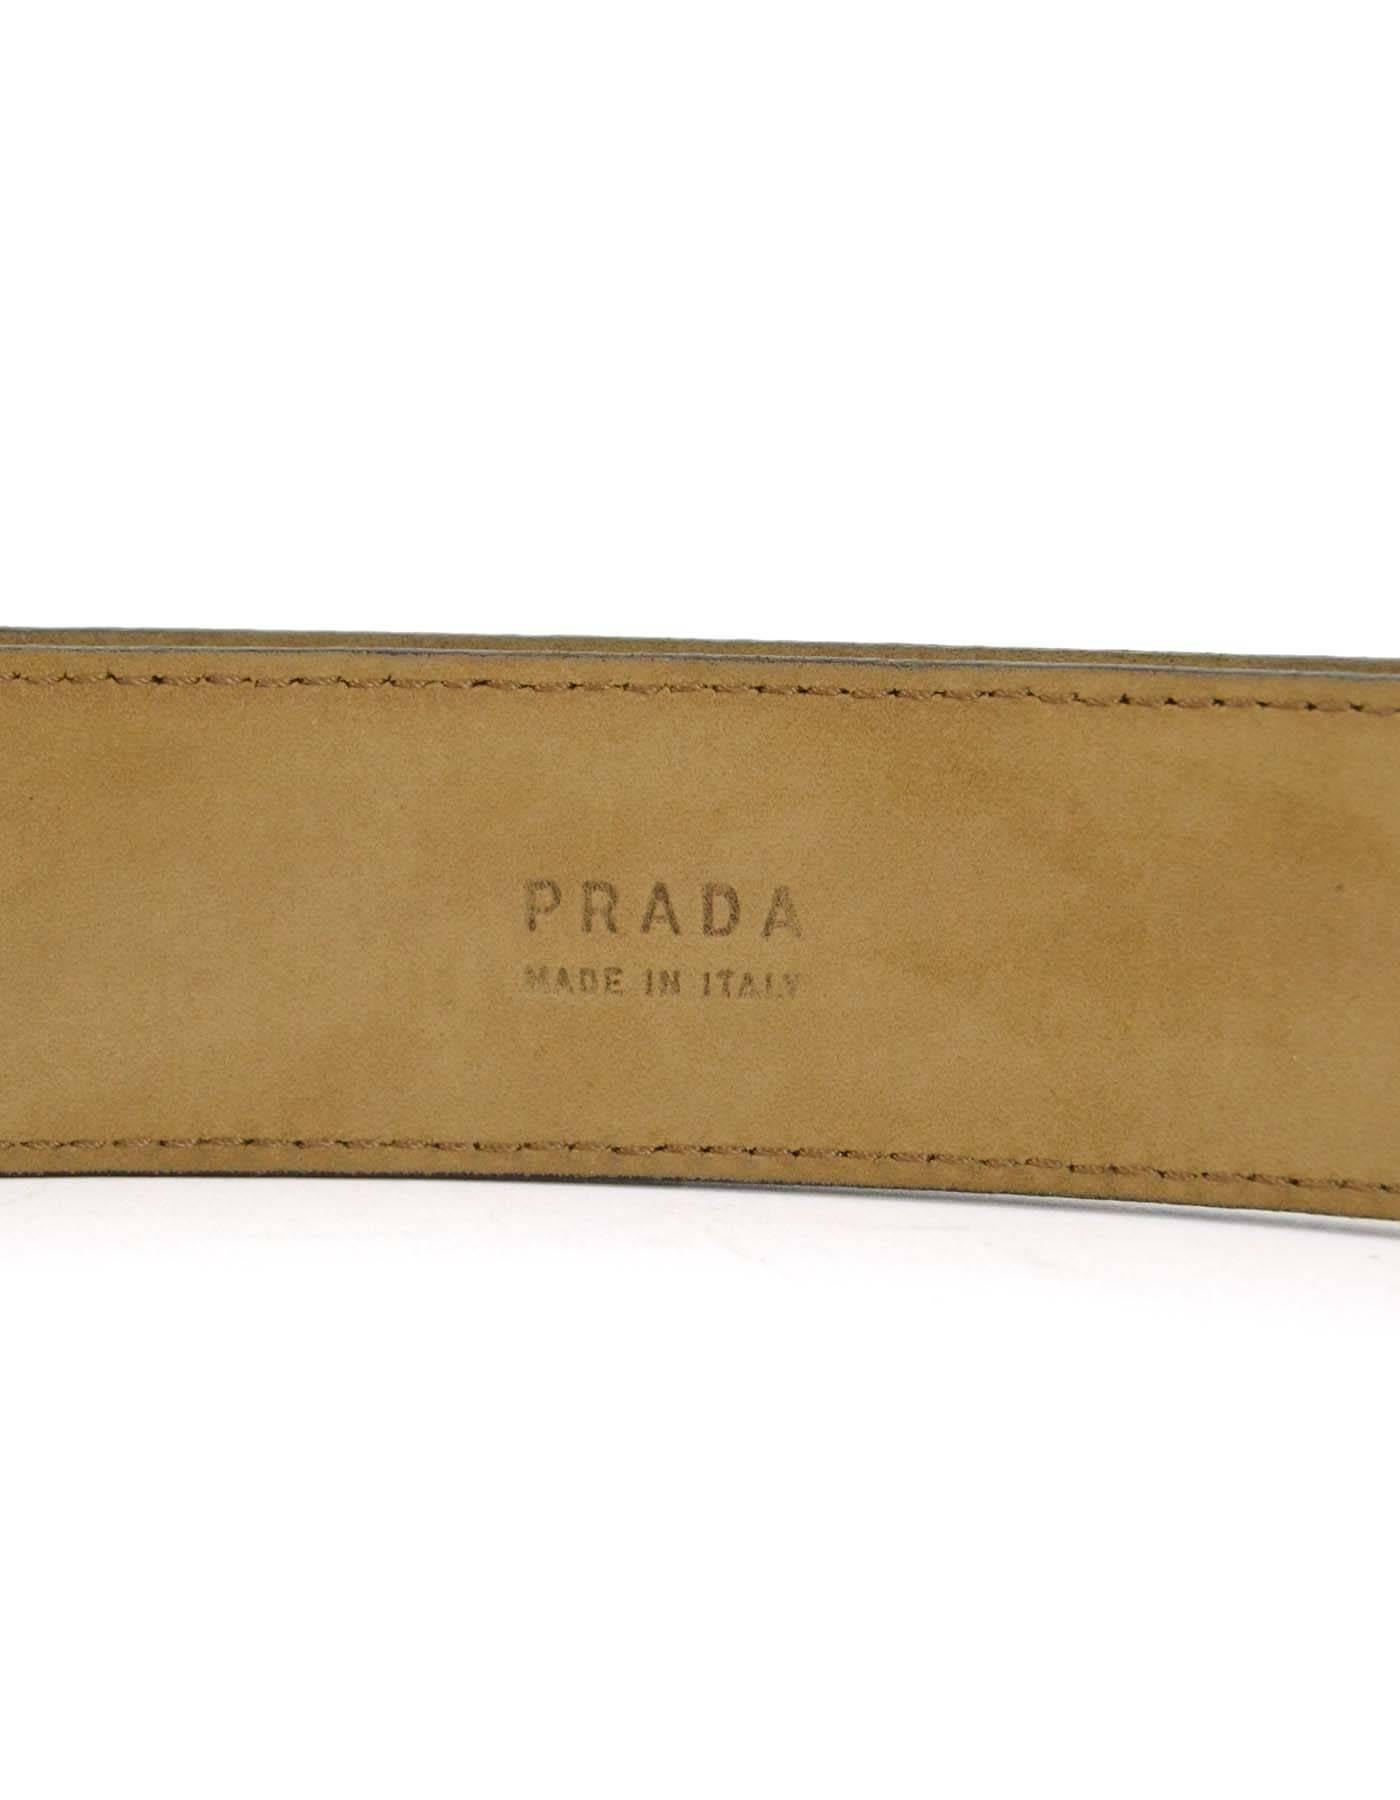 Prada Brown Distressed Leather Belt sz 85 GHW 1